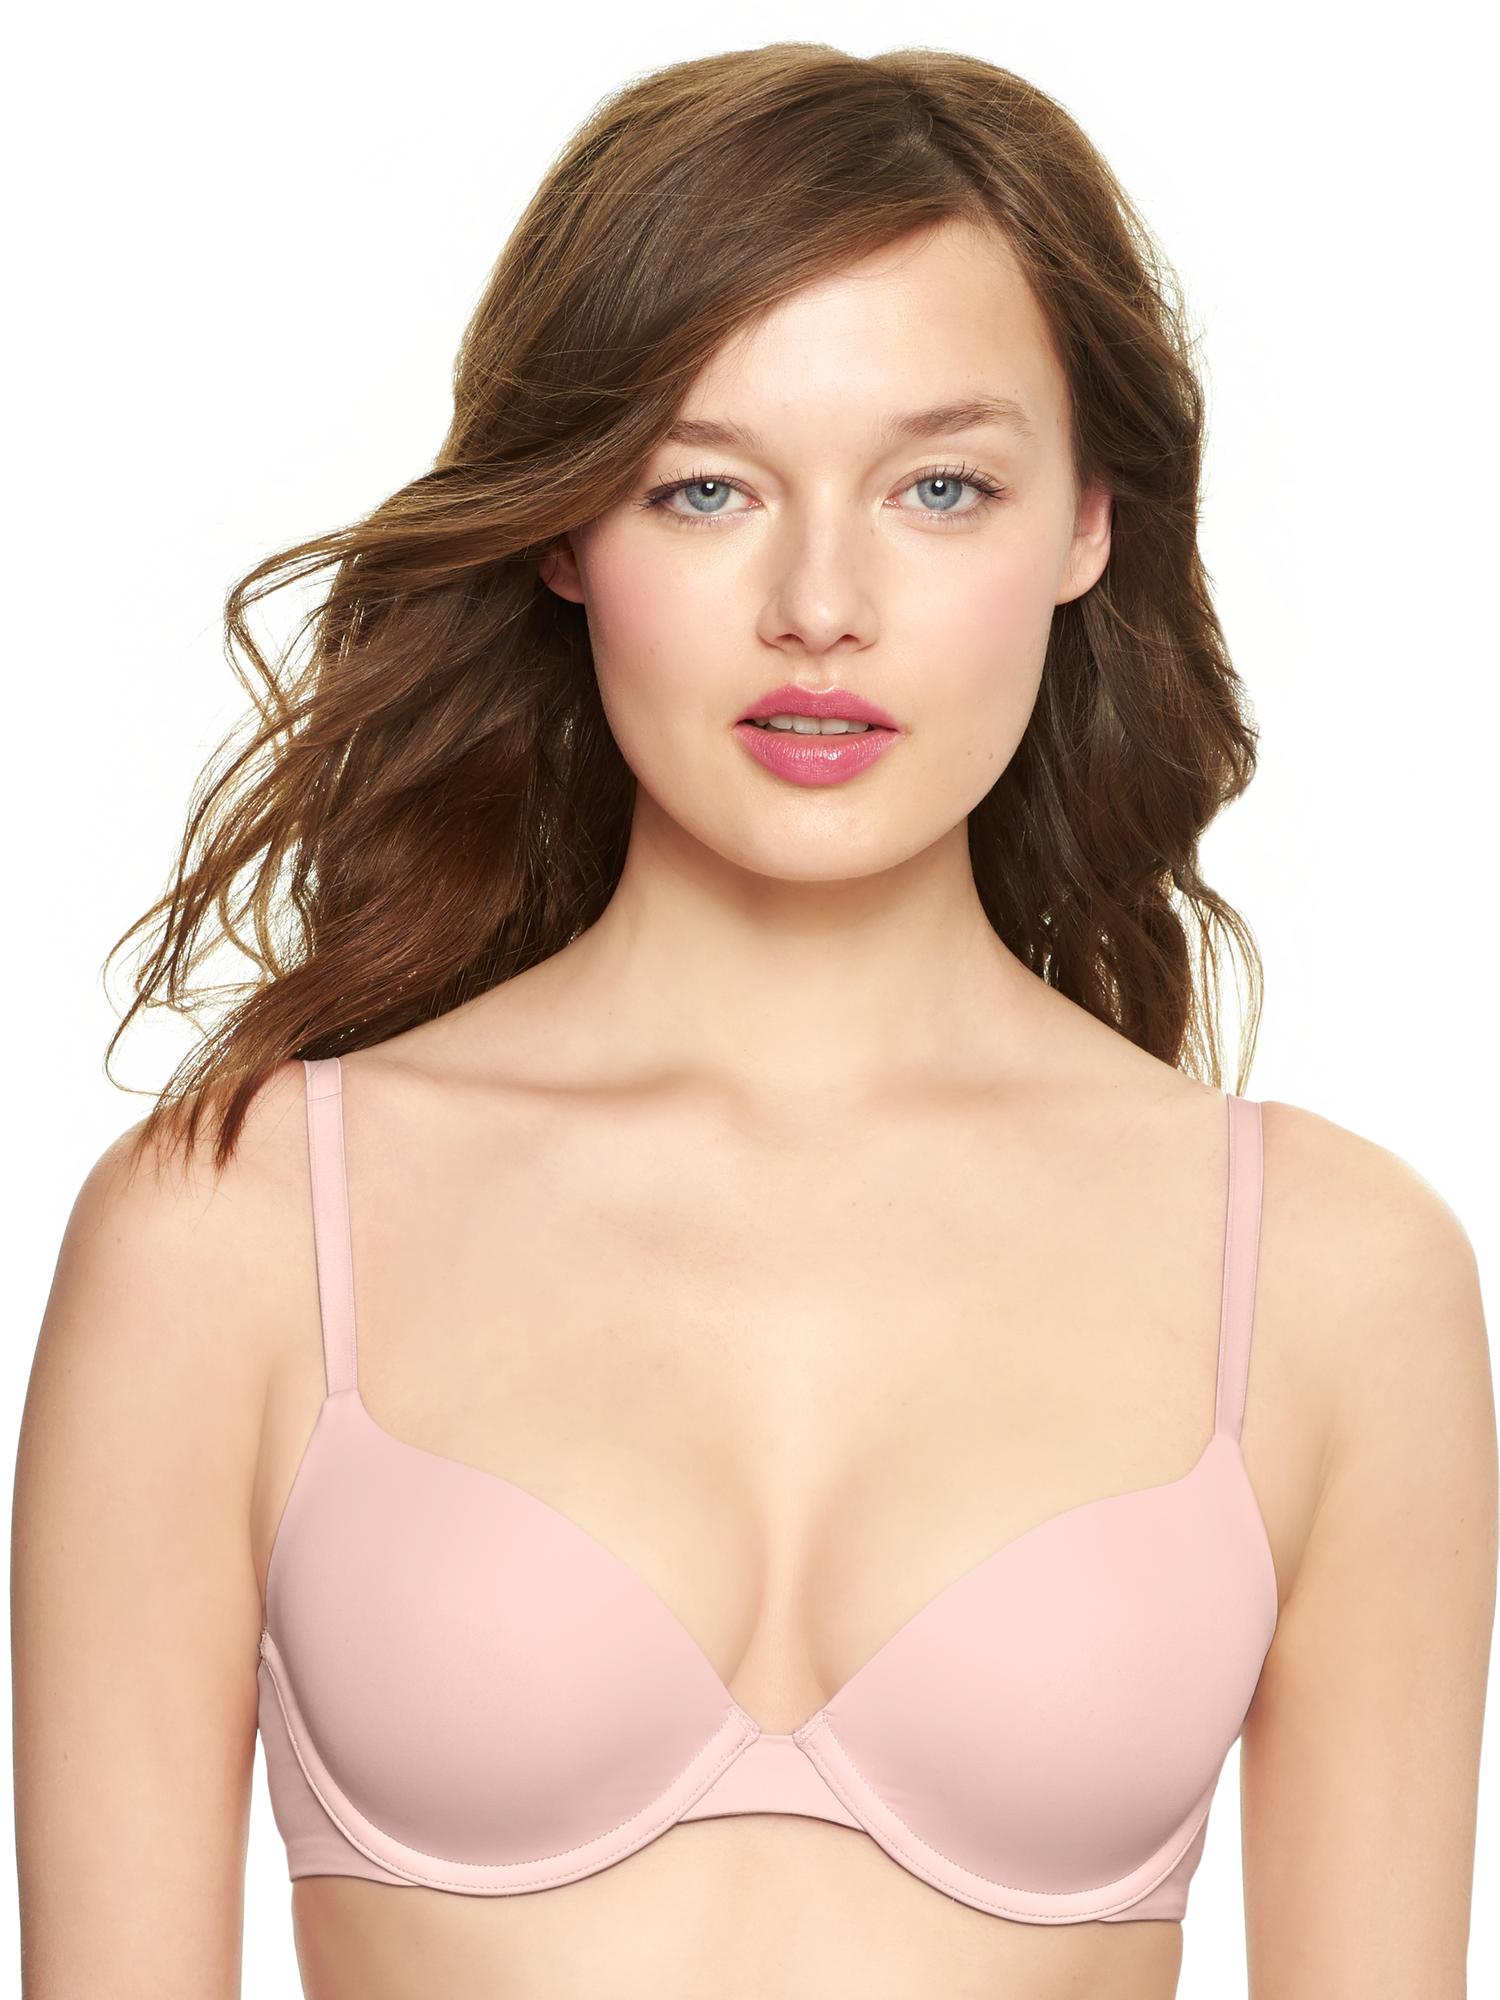 Uplift bra